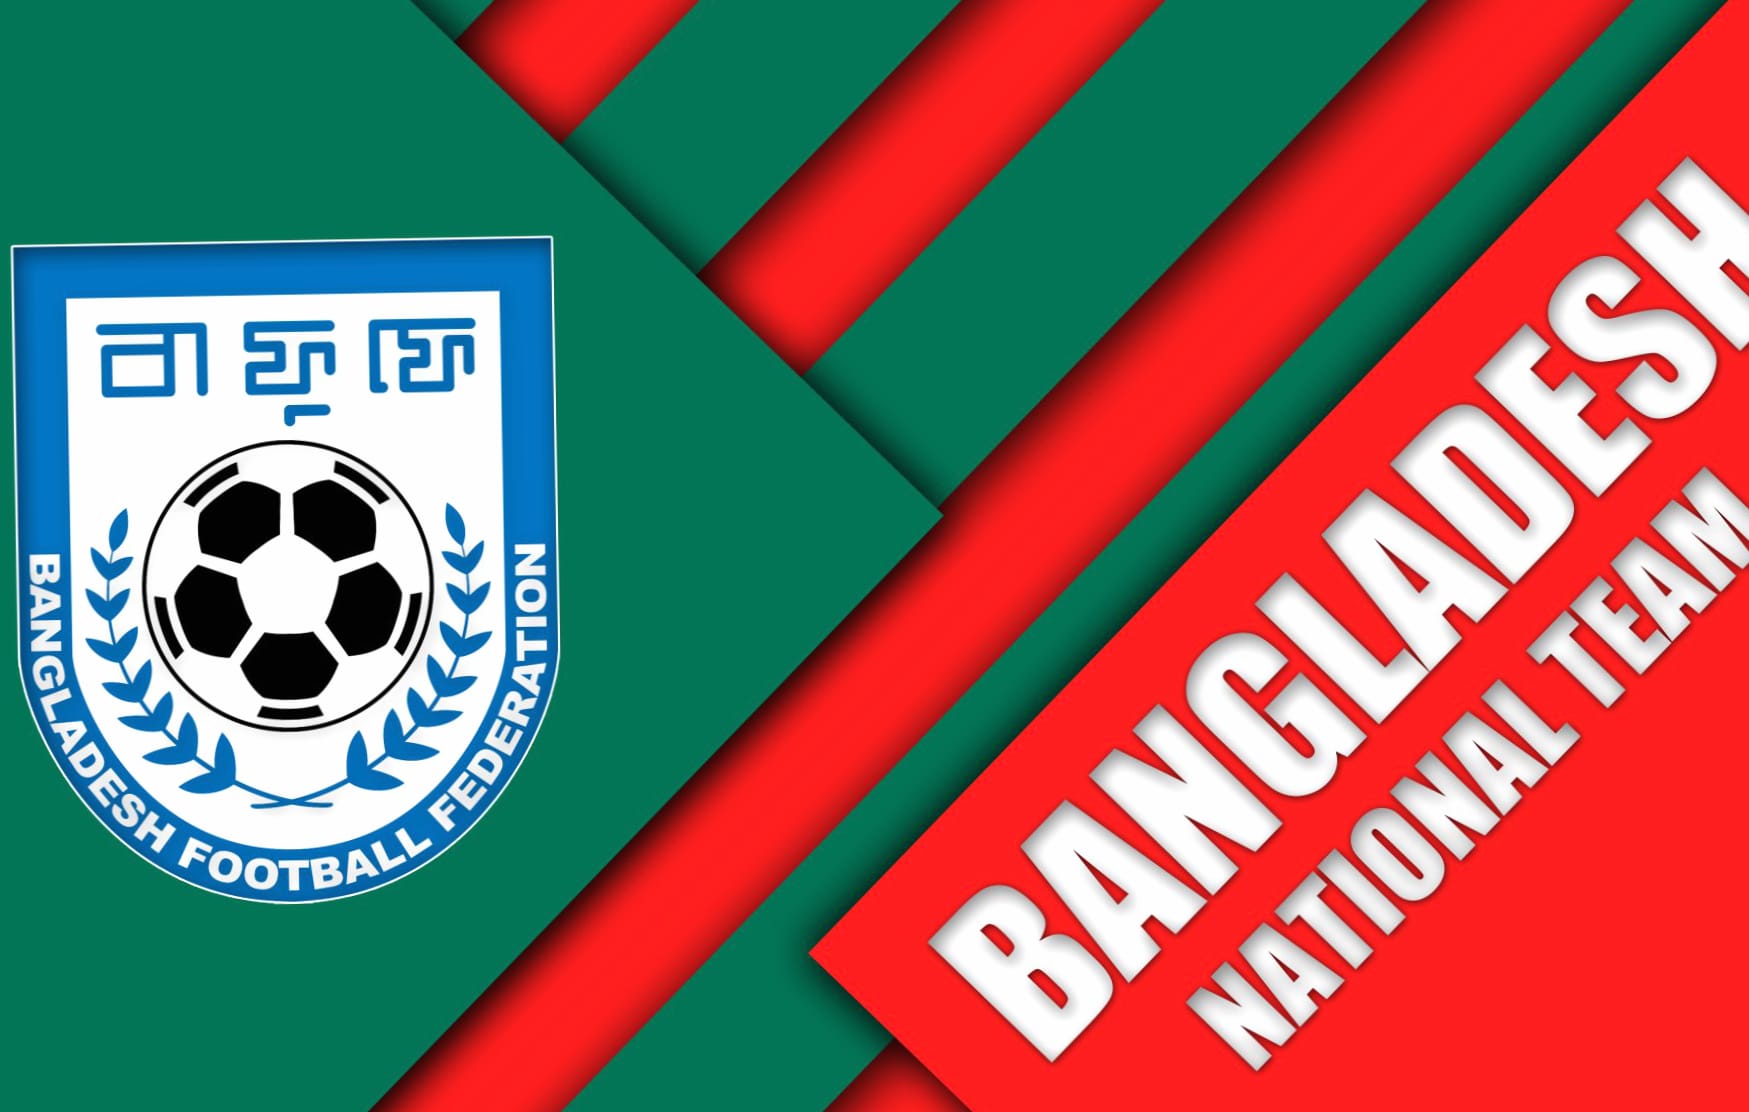 Bangladesh National Football Team at 2048 x 2048 iPad size wallpapers HD quality